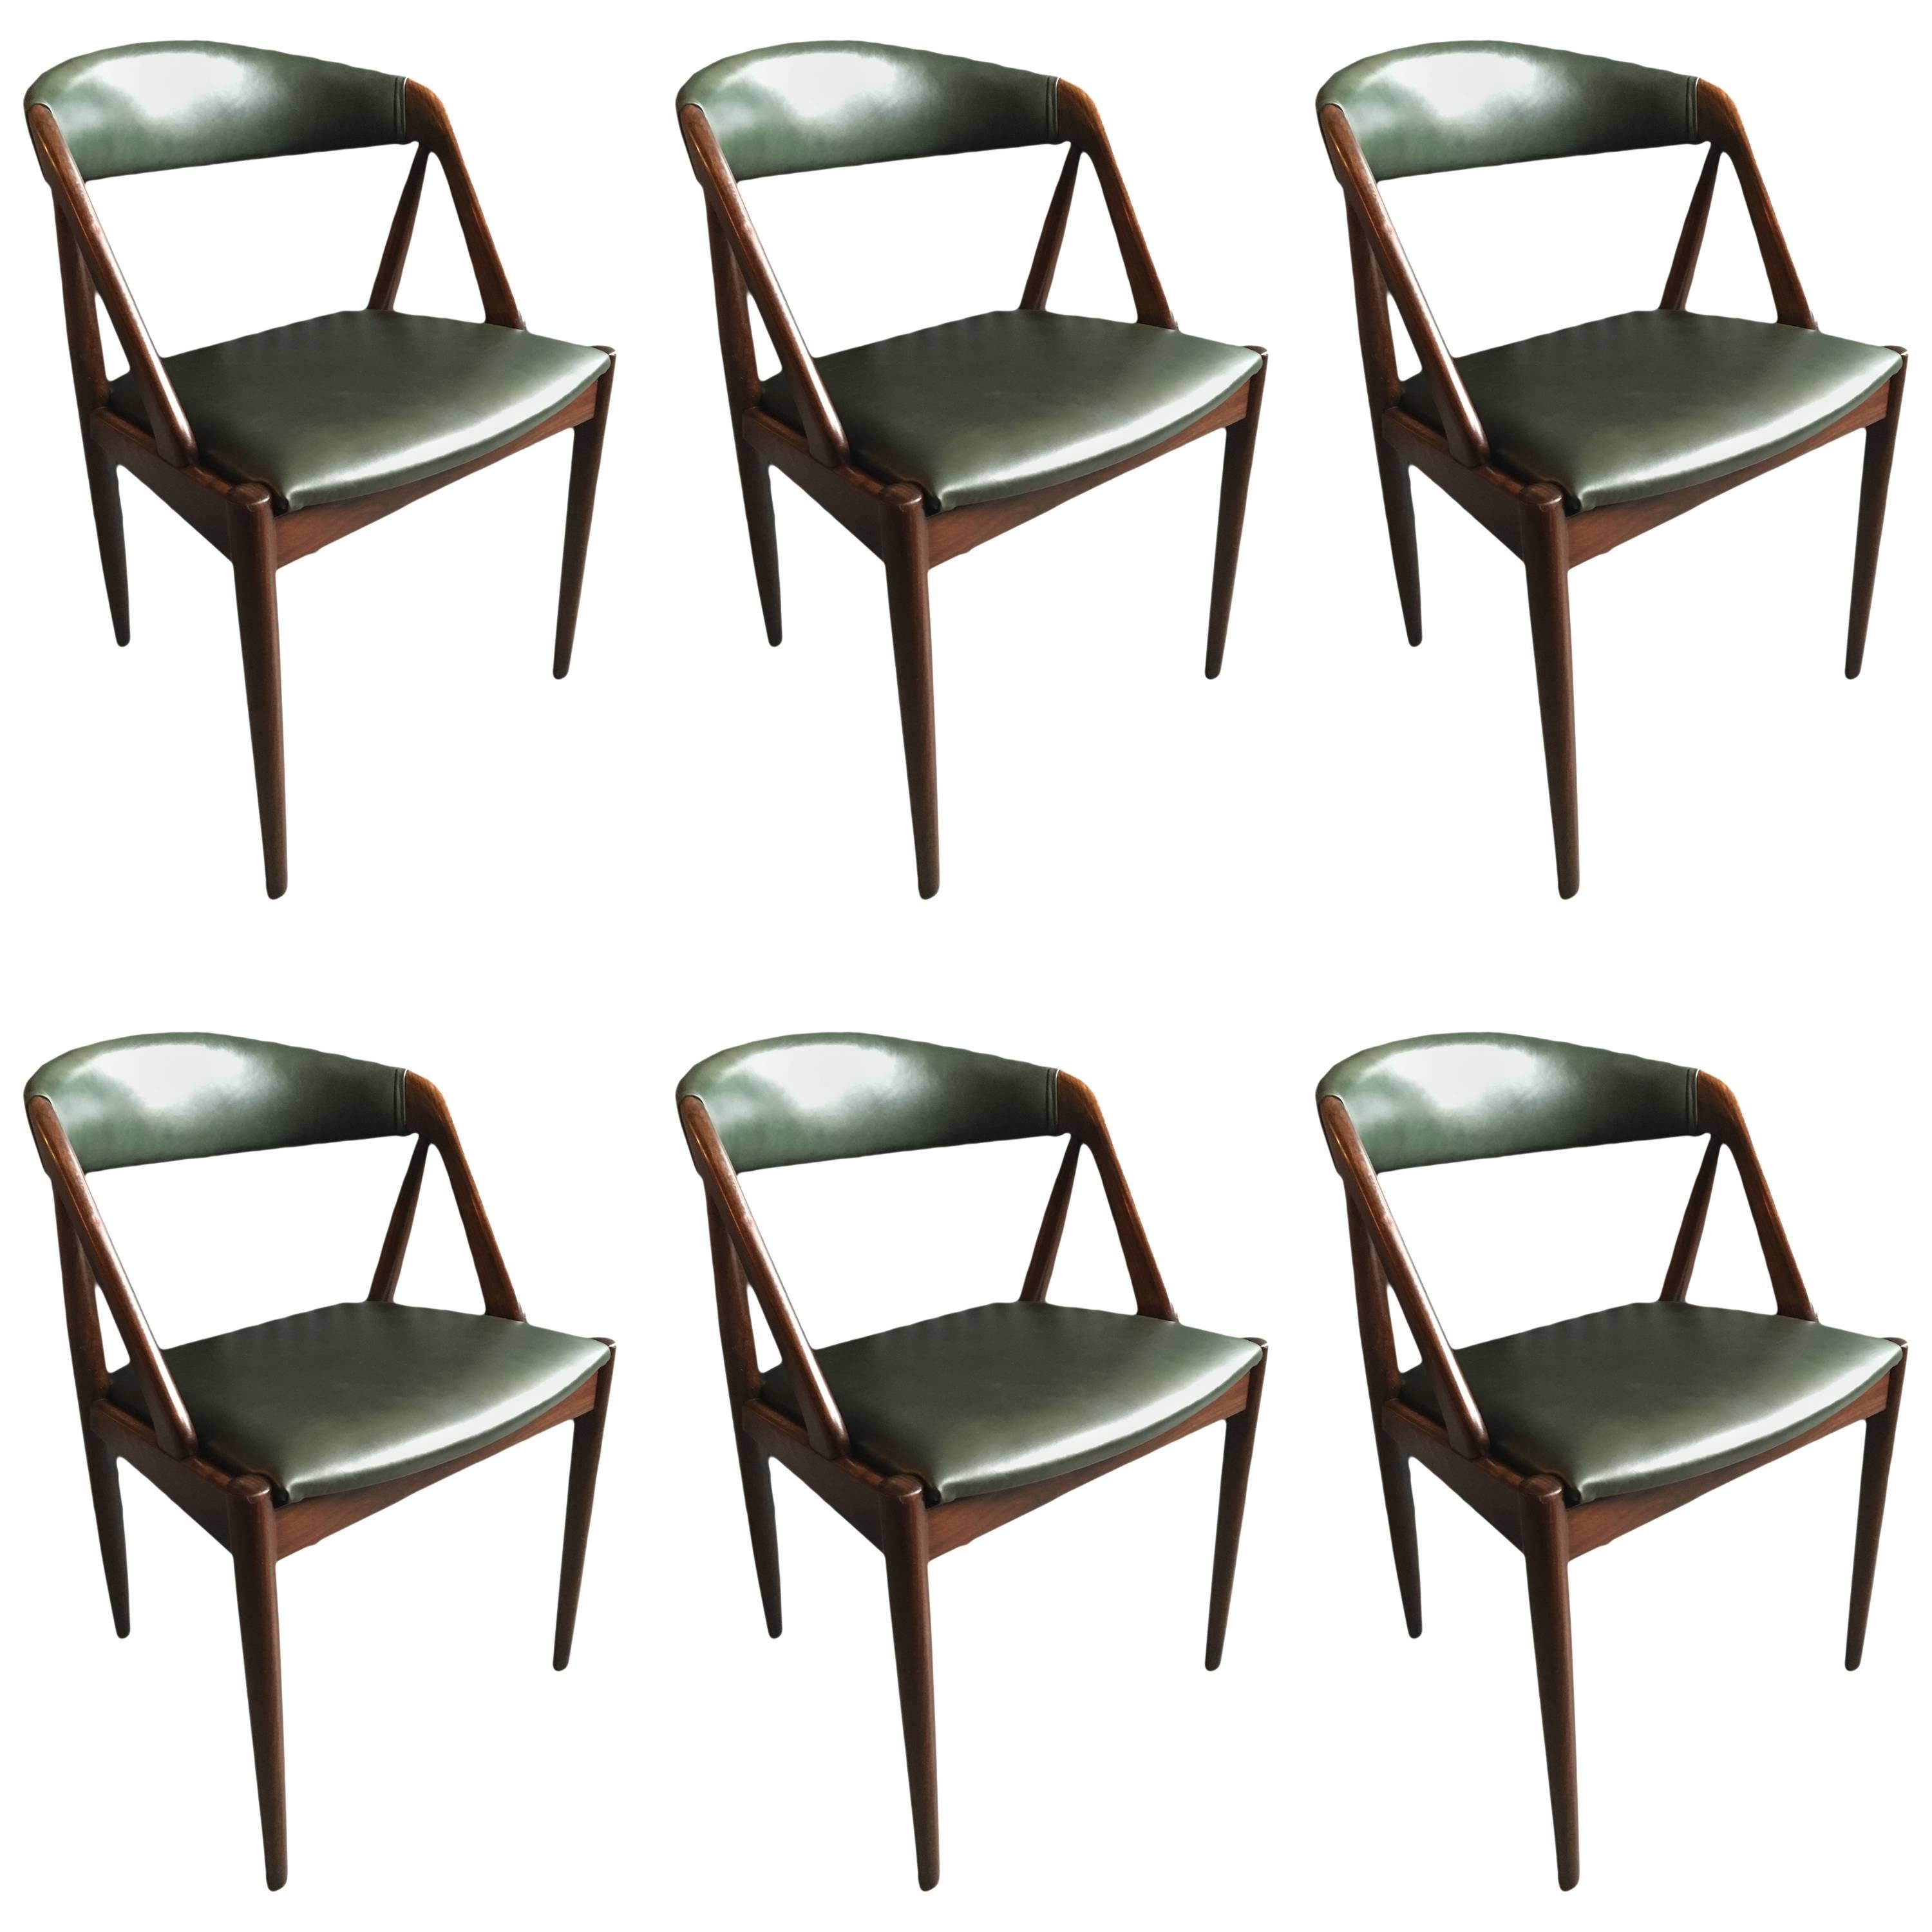 Kai Kristiansen Dining Chairs, Set of Six, New Italian Leather Upholstery